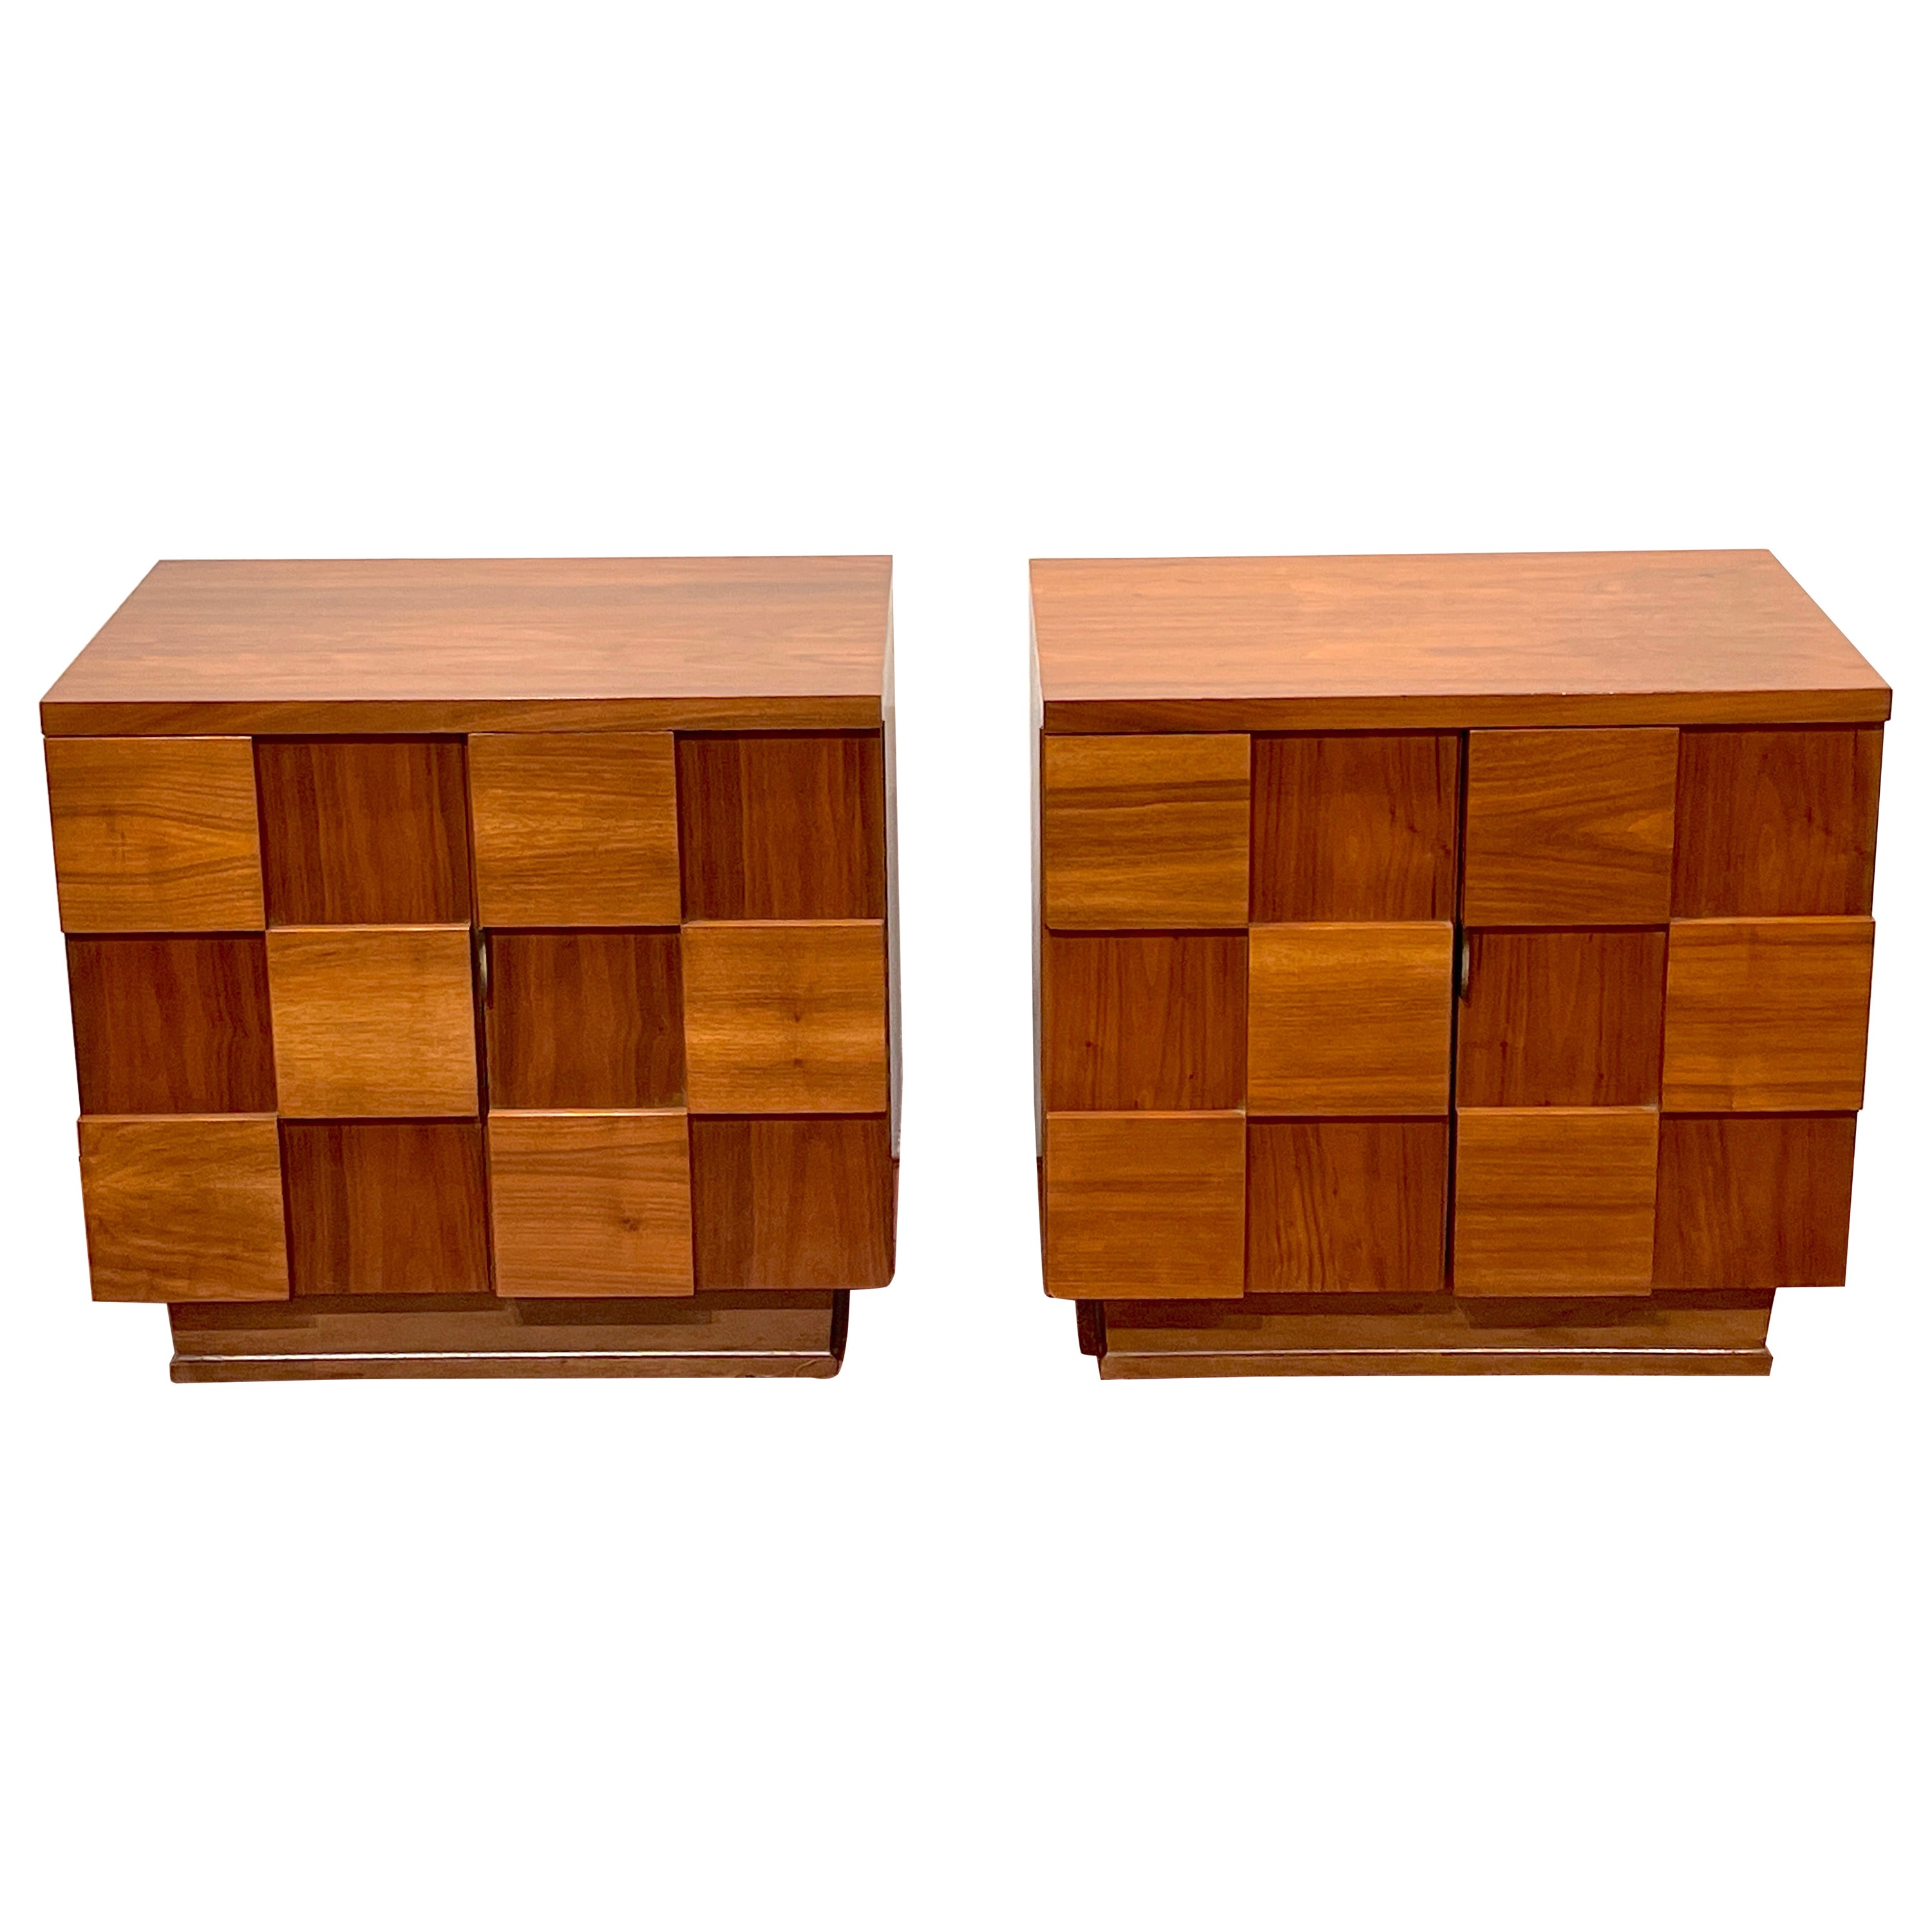 Pair of Mid-Century American Designer Walnut 'Checkerboard' Nightstands 